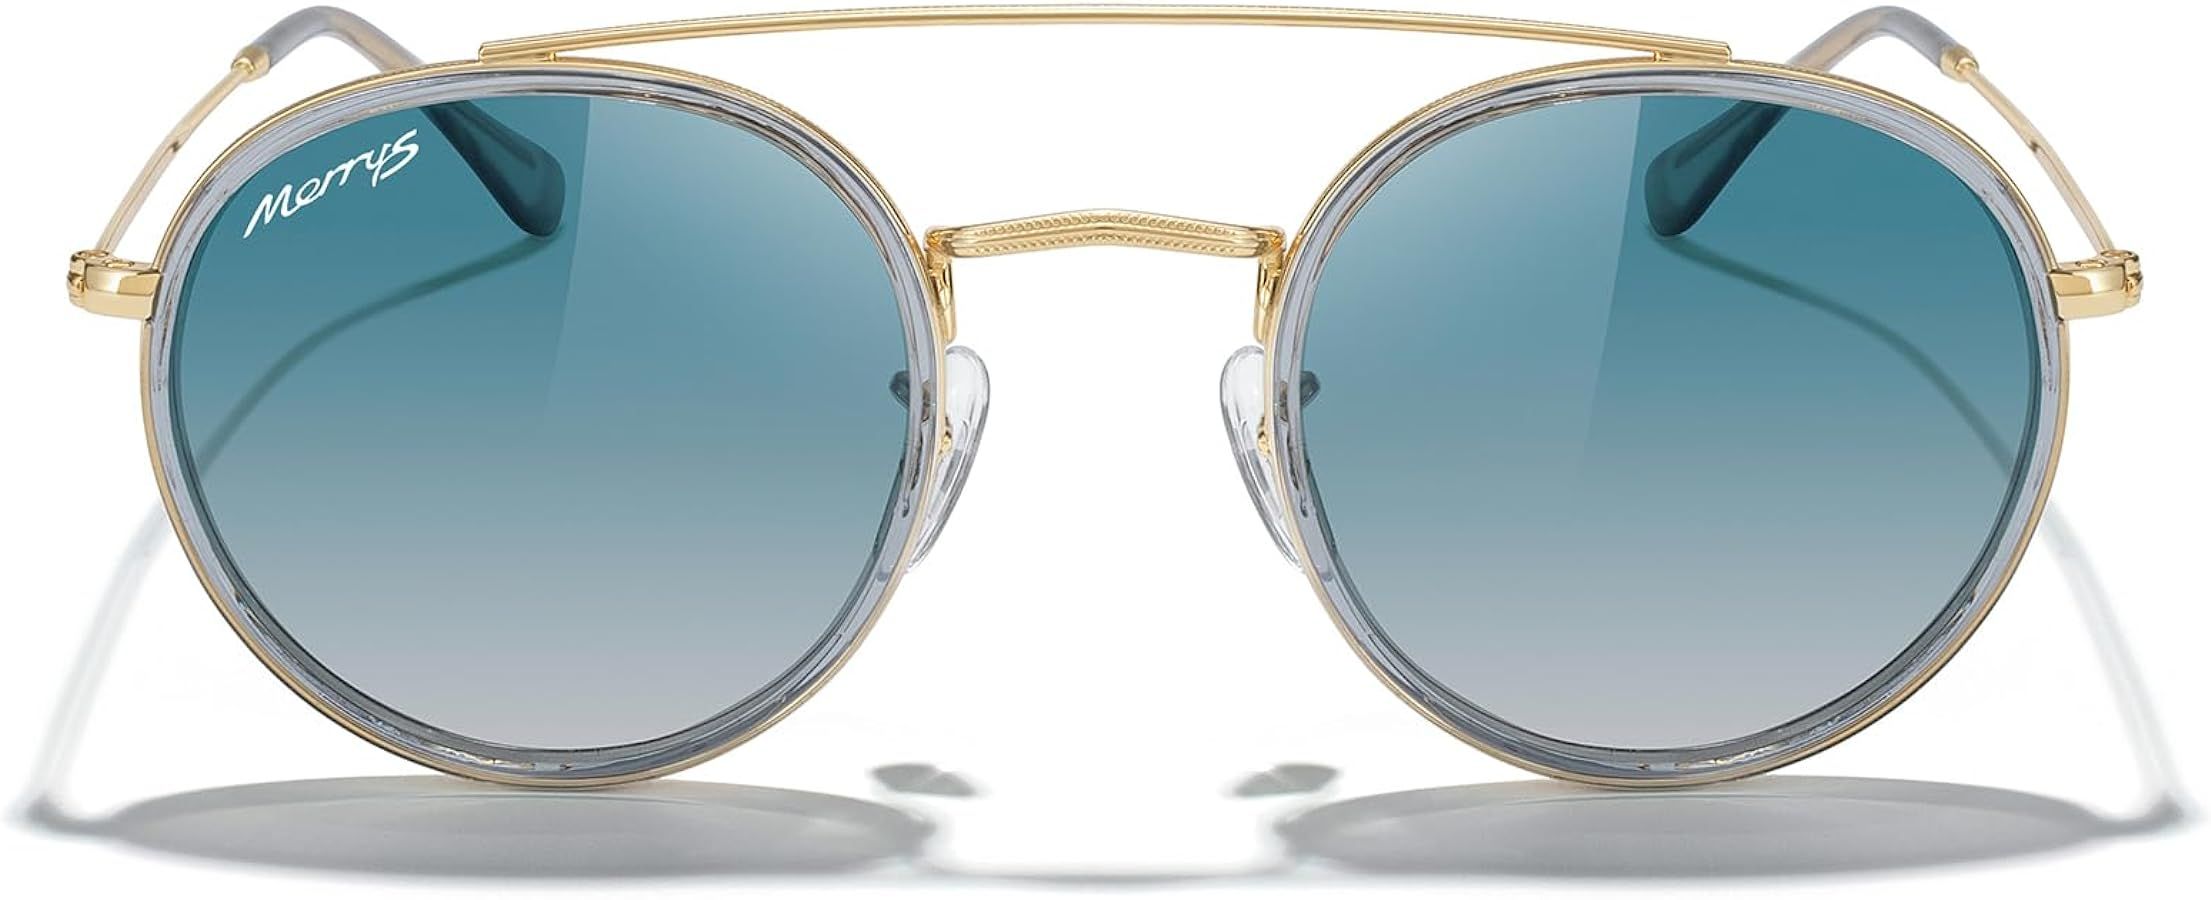 MERRY'S Retro Round Polarized Sunglasses - Unisex Double Bridge Sun Glasses | Amazon (US)